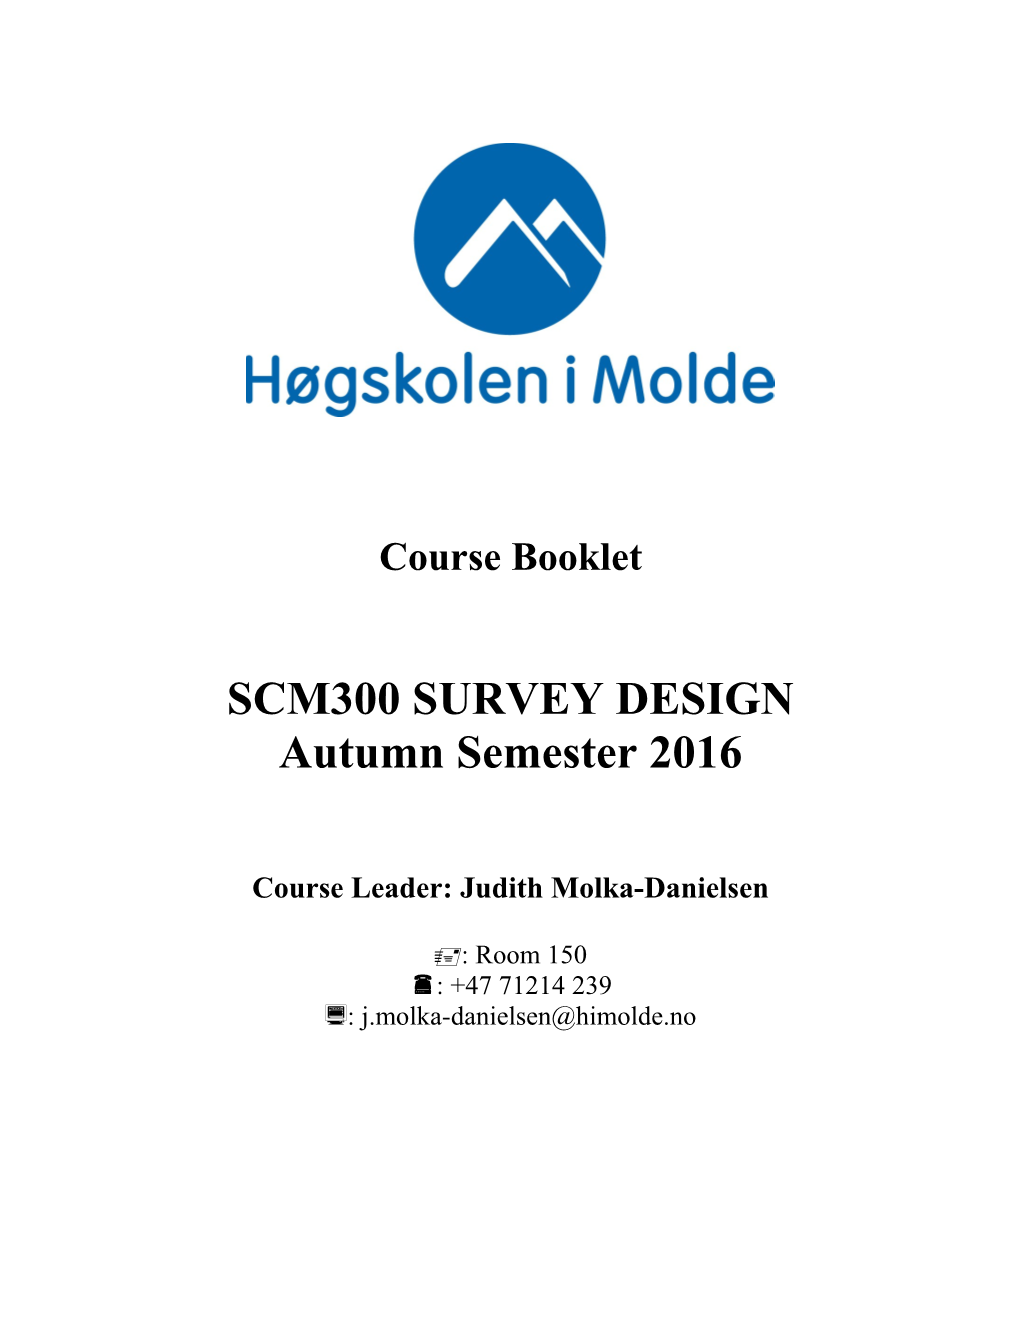 SCM300 Survey Designjudith Molka-Danielsenautumn Semester 2016